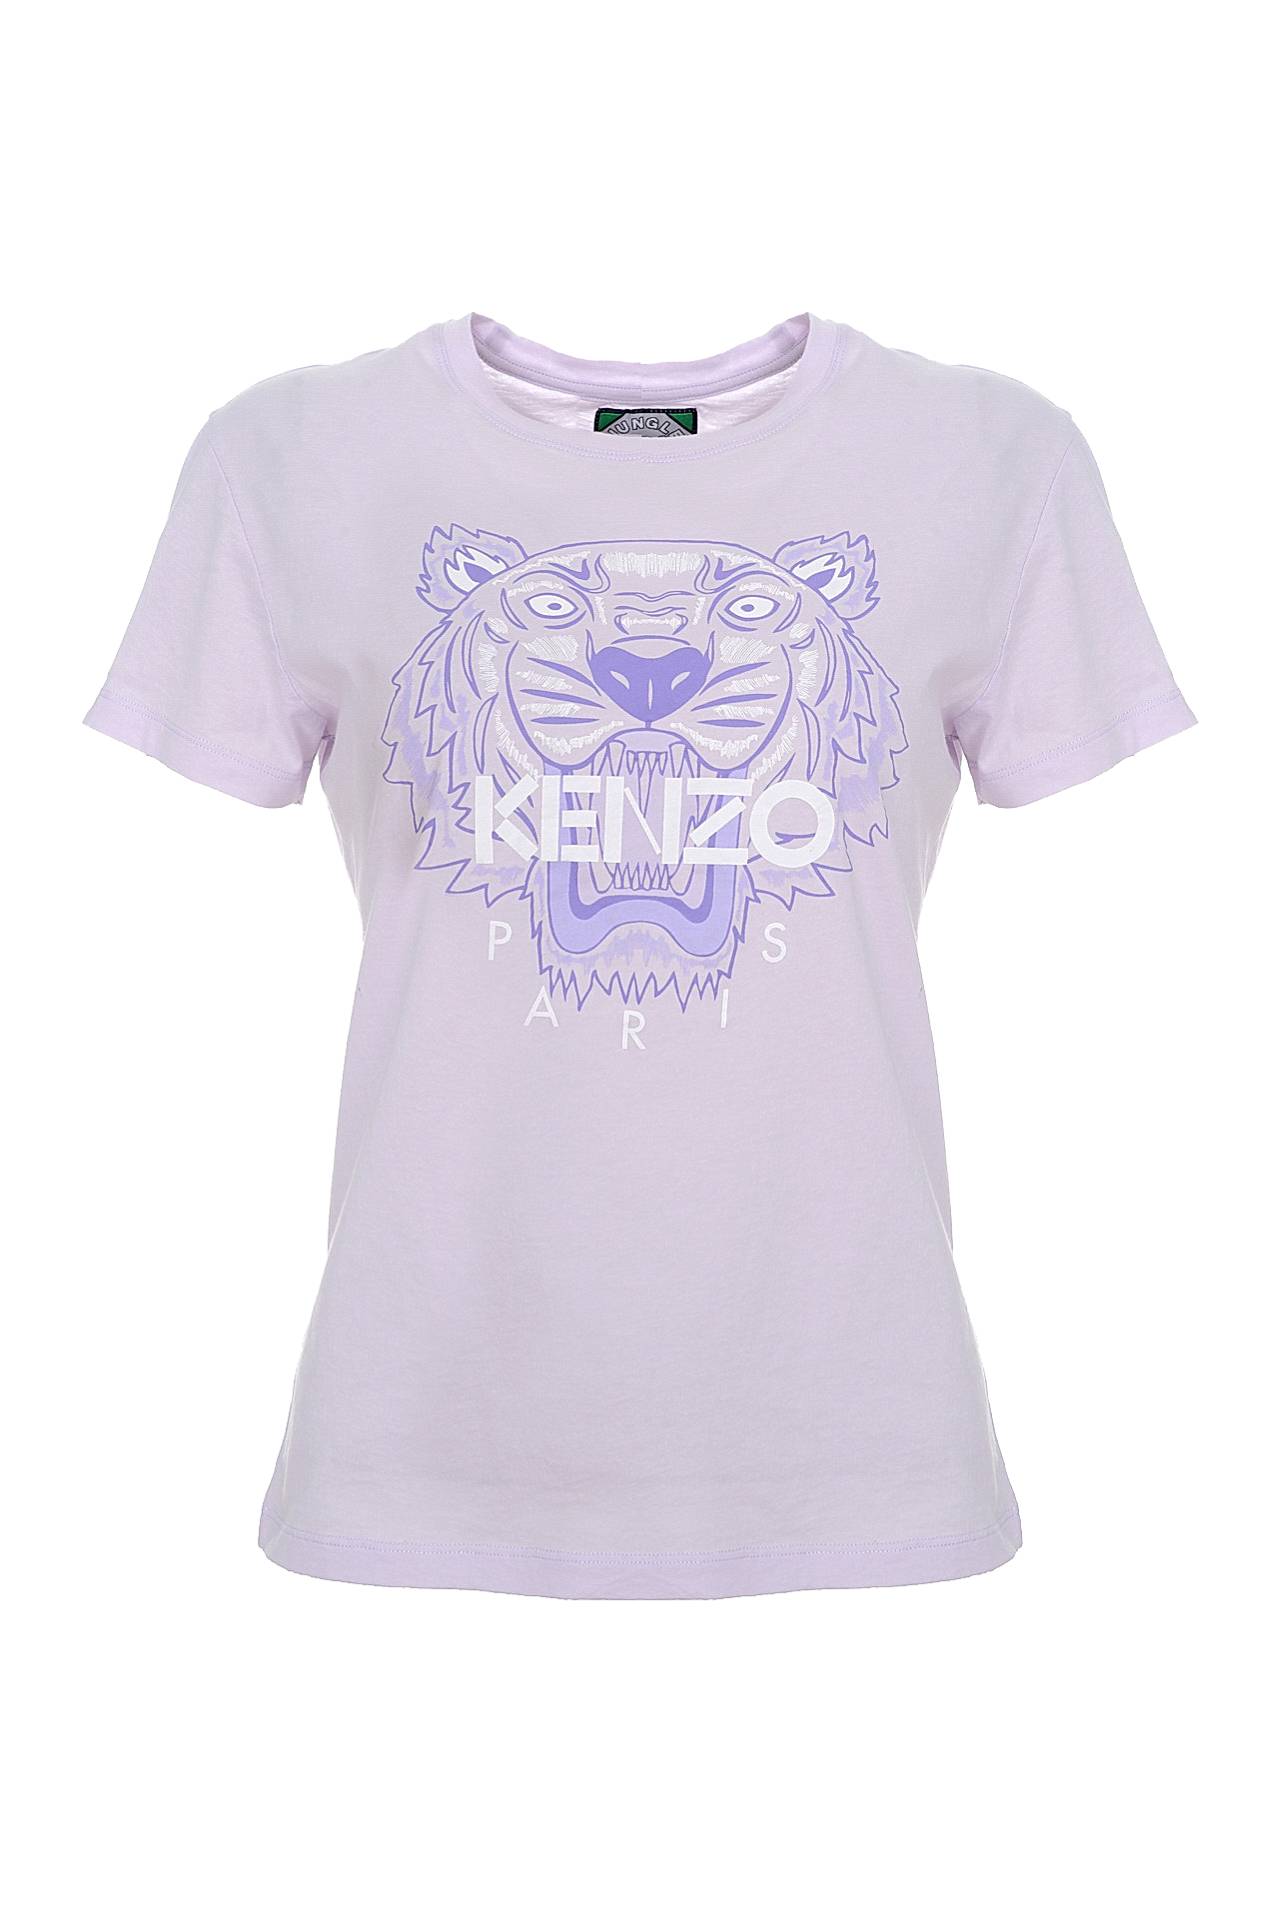 Одежда женская Футболка KENZO (F552TS7214YO/15.2). Купить за 7500 руб.